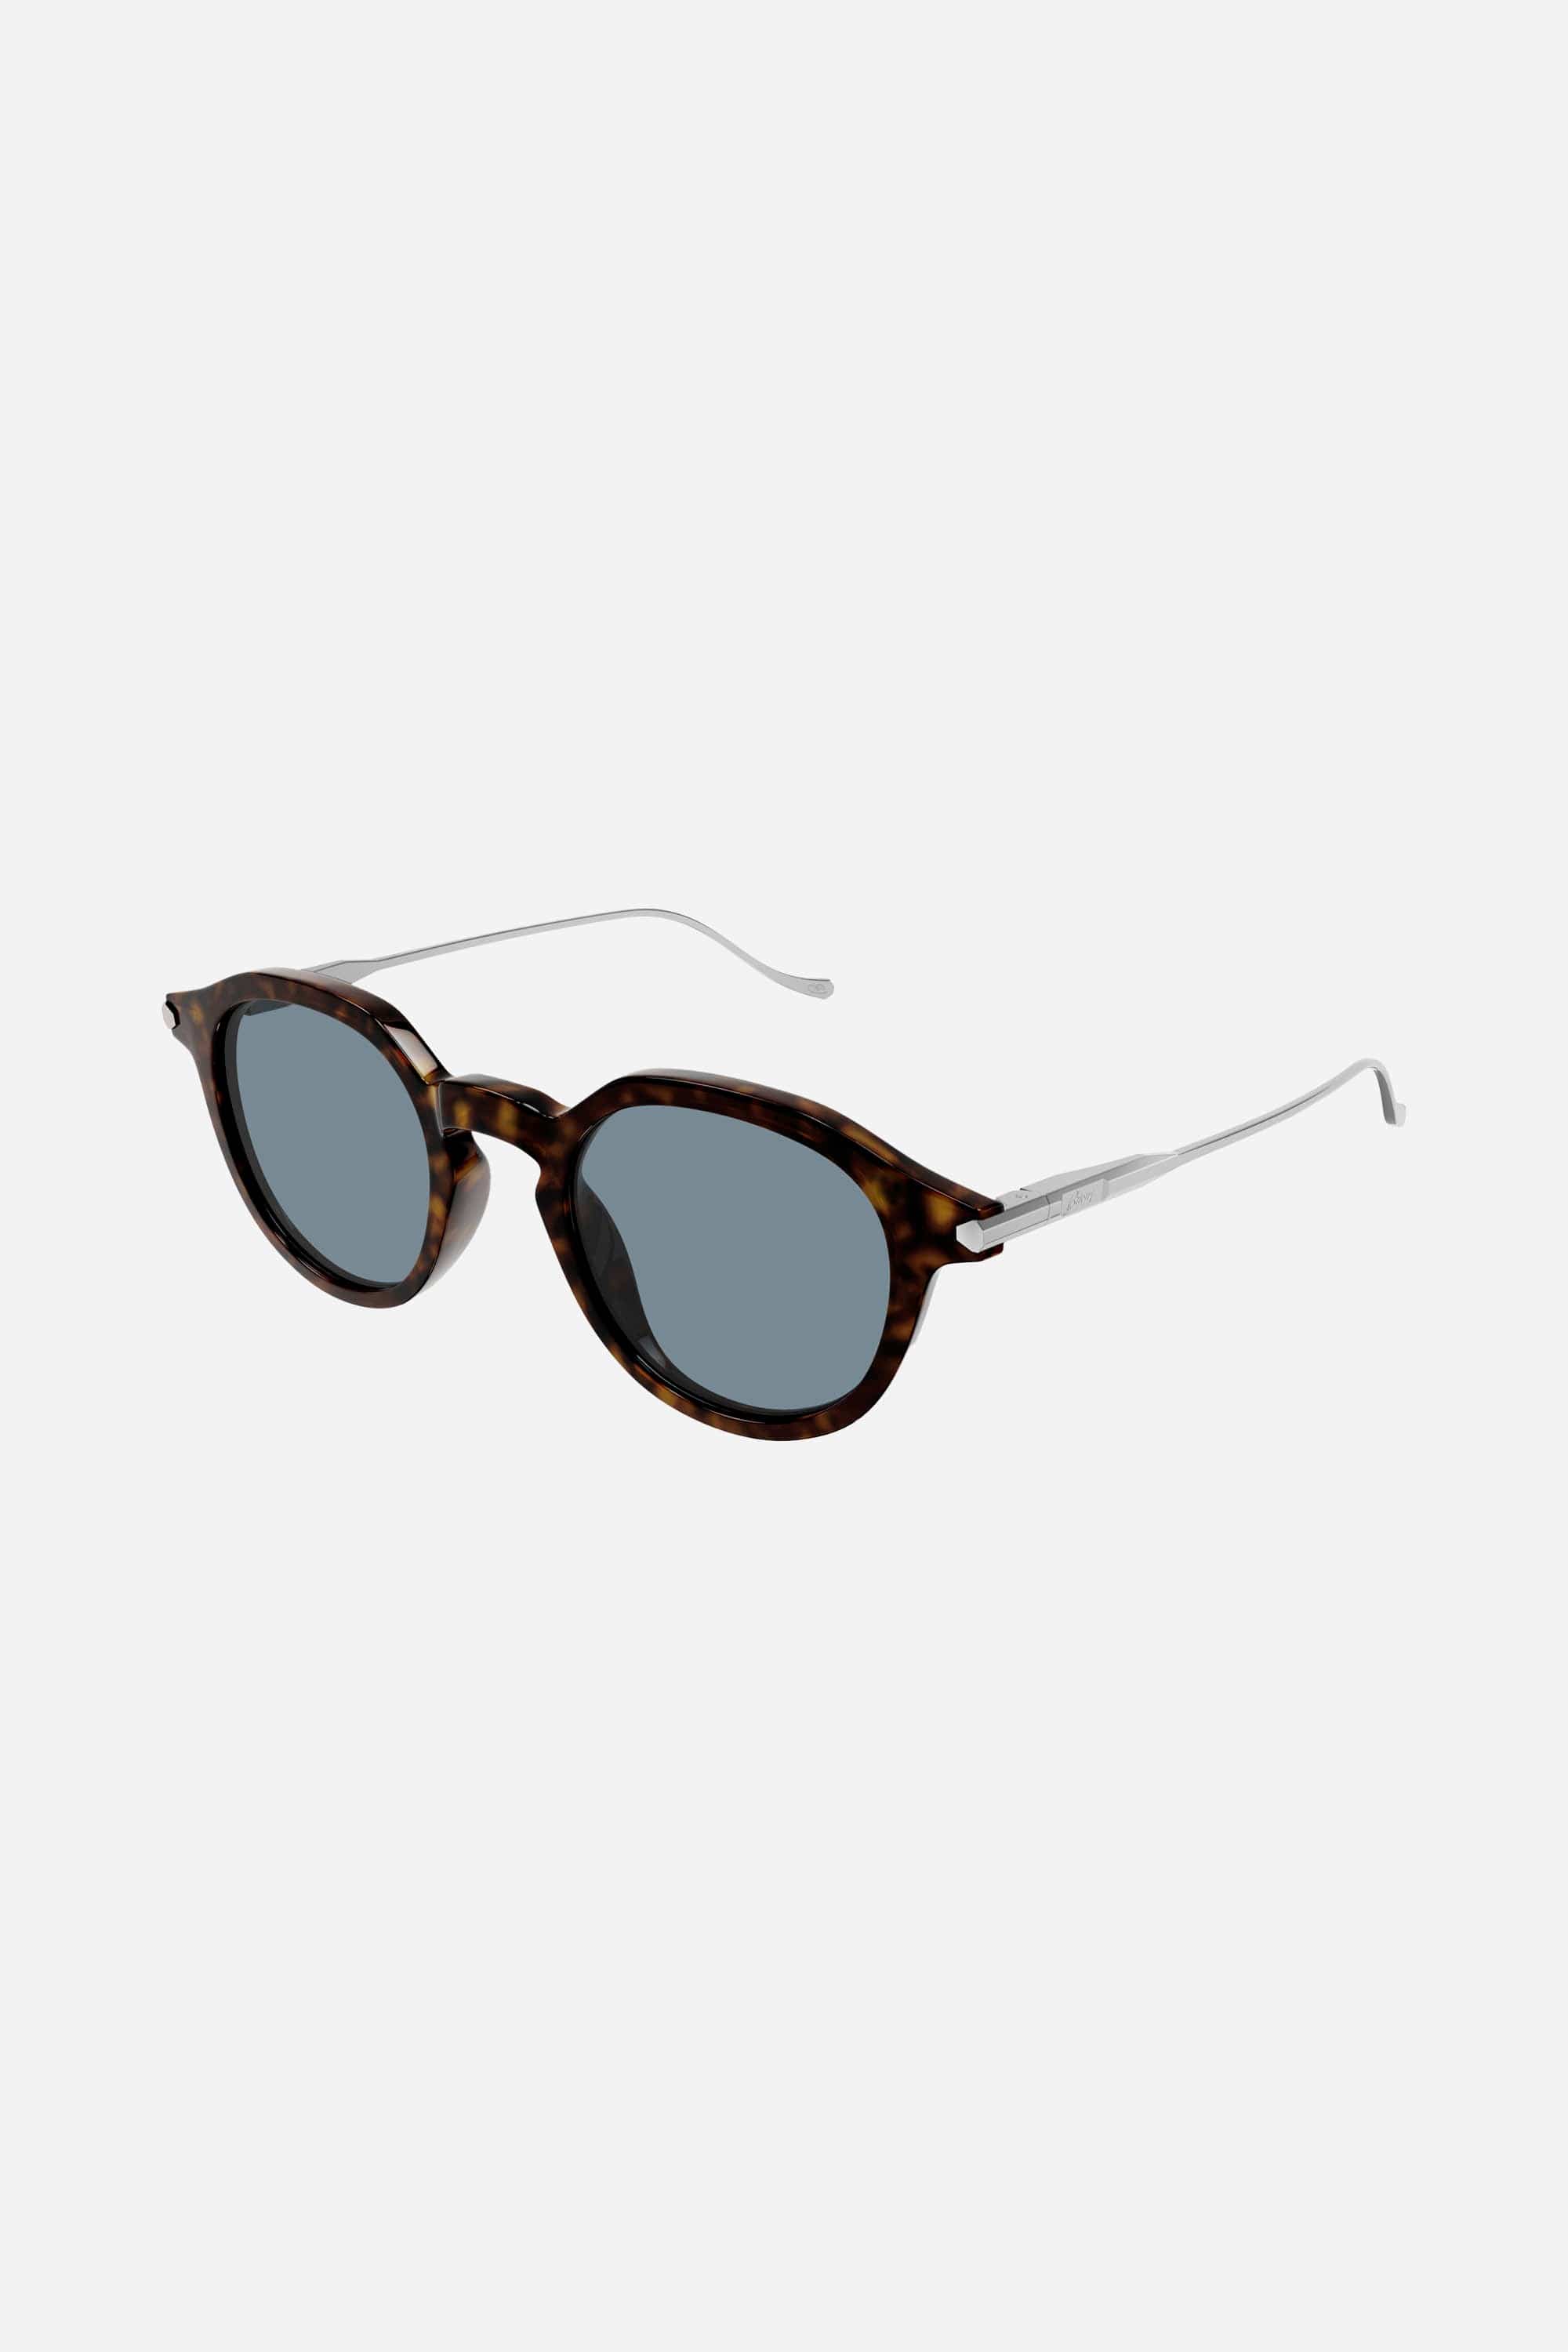 Brioni round havana sunglasses - Eyewear Club